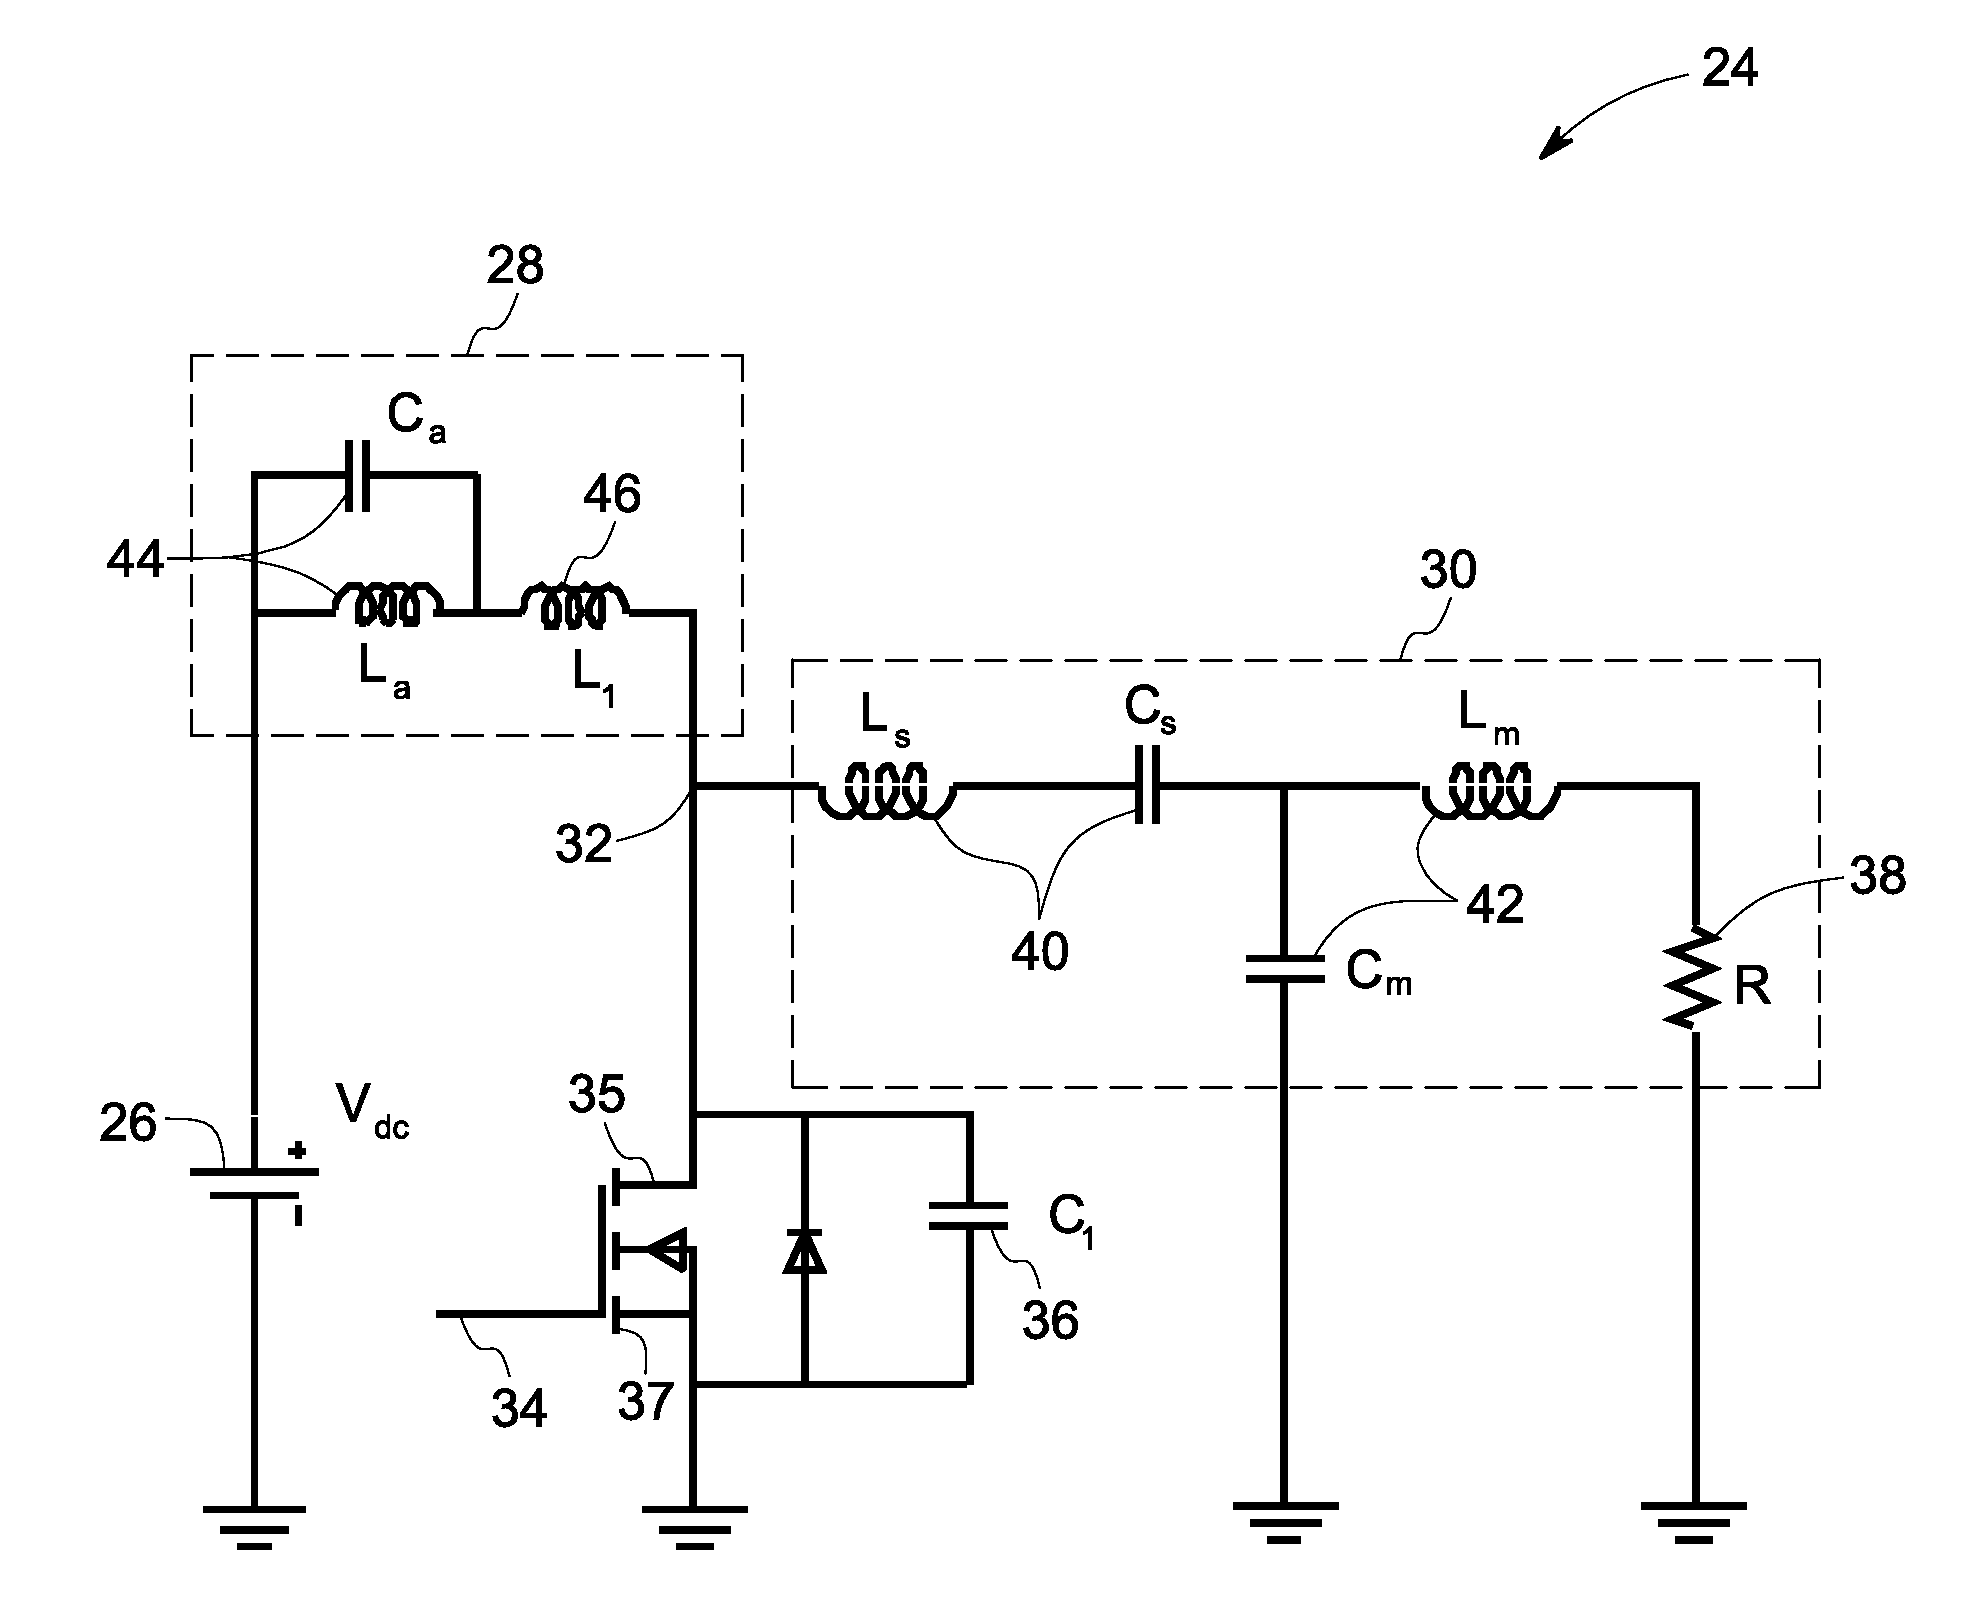 Class-e amplifier and lighting ballast using the amplifier